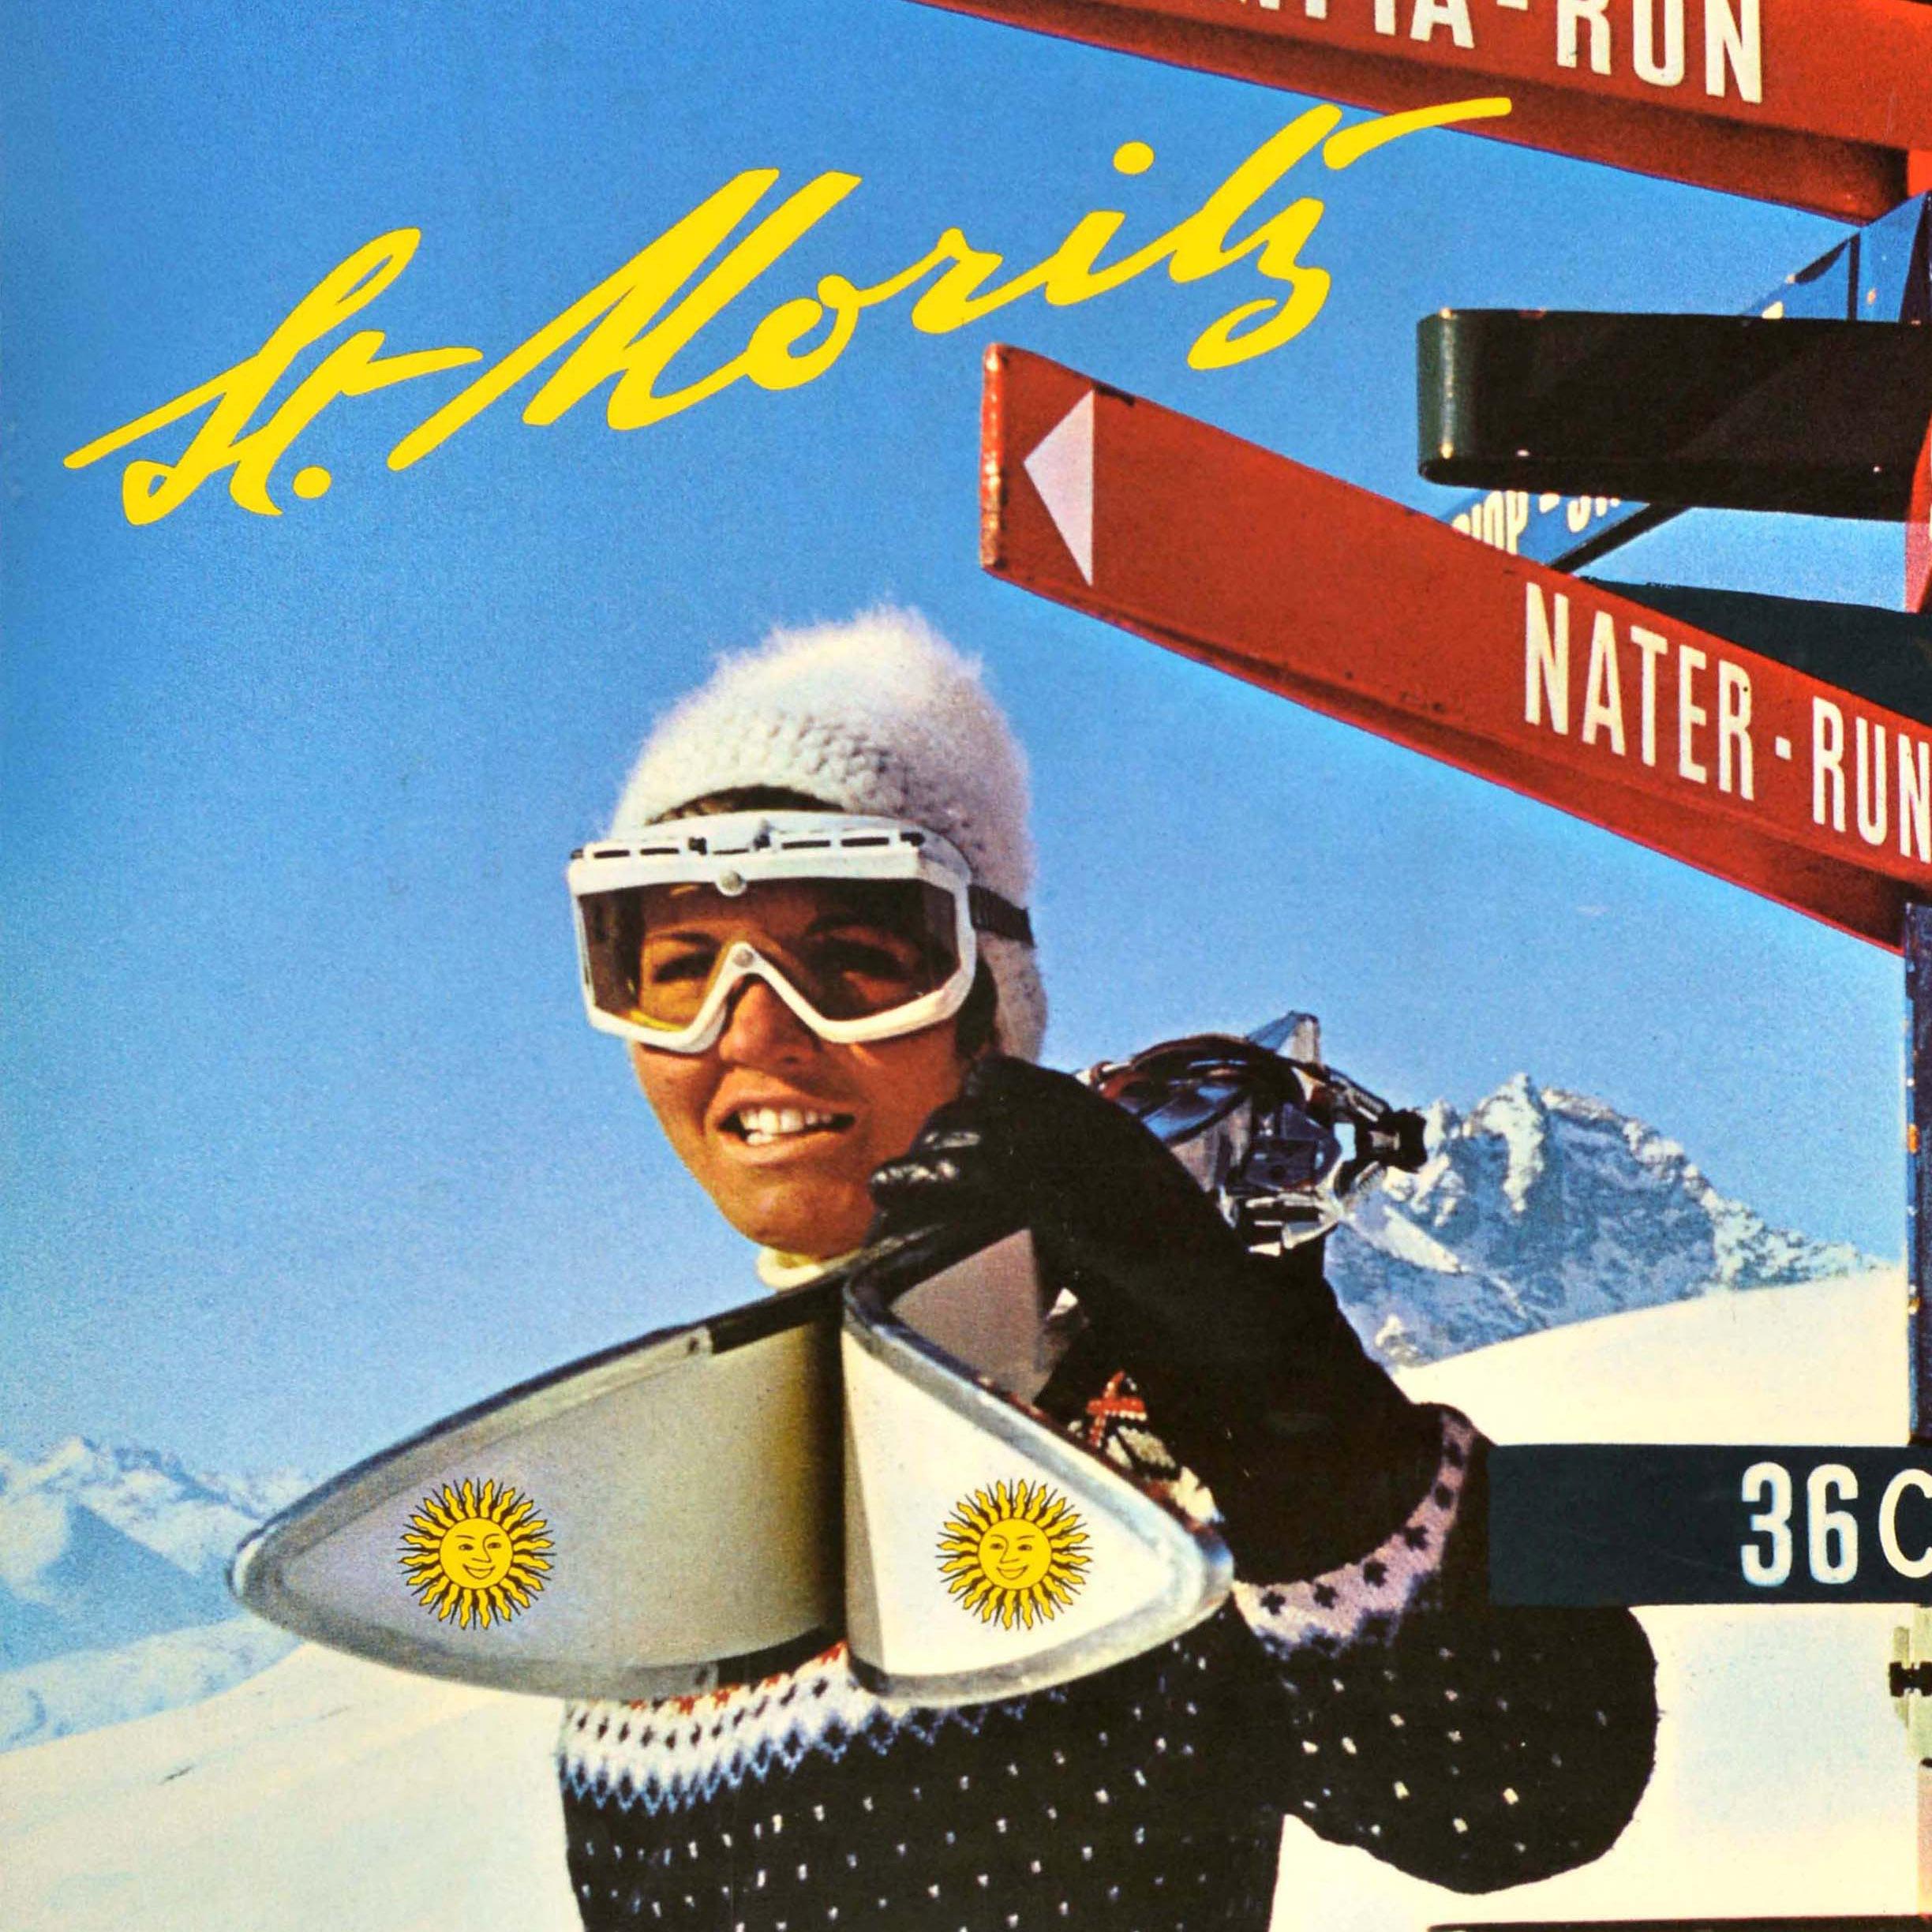 Original Vintage Sport Travel Poster St Moritz Skiing Switzerland Piste Run Post - Print by Unknown